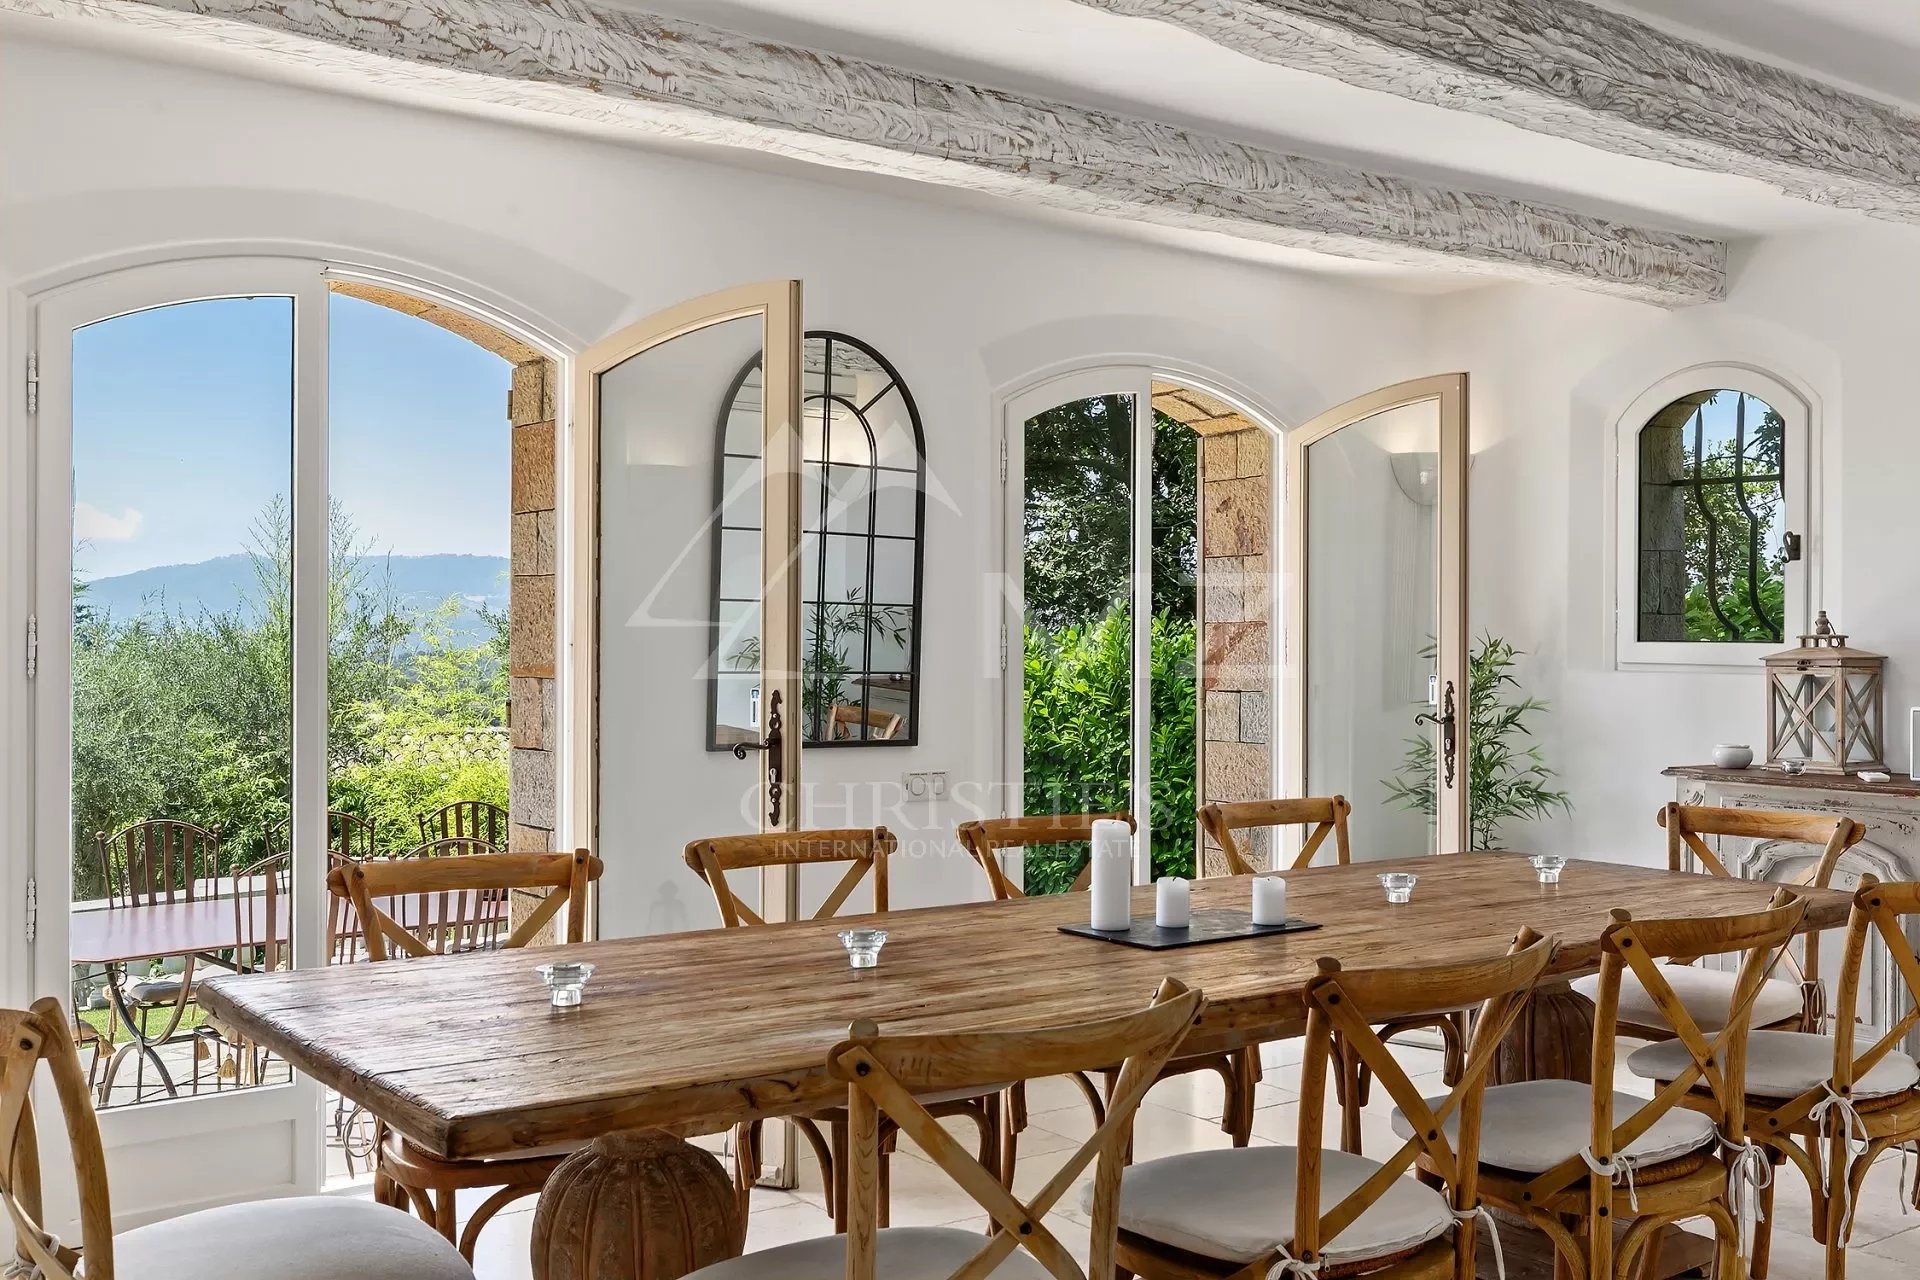 Mougins - Provencal villa with open views